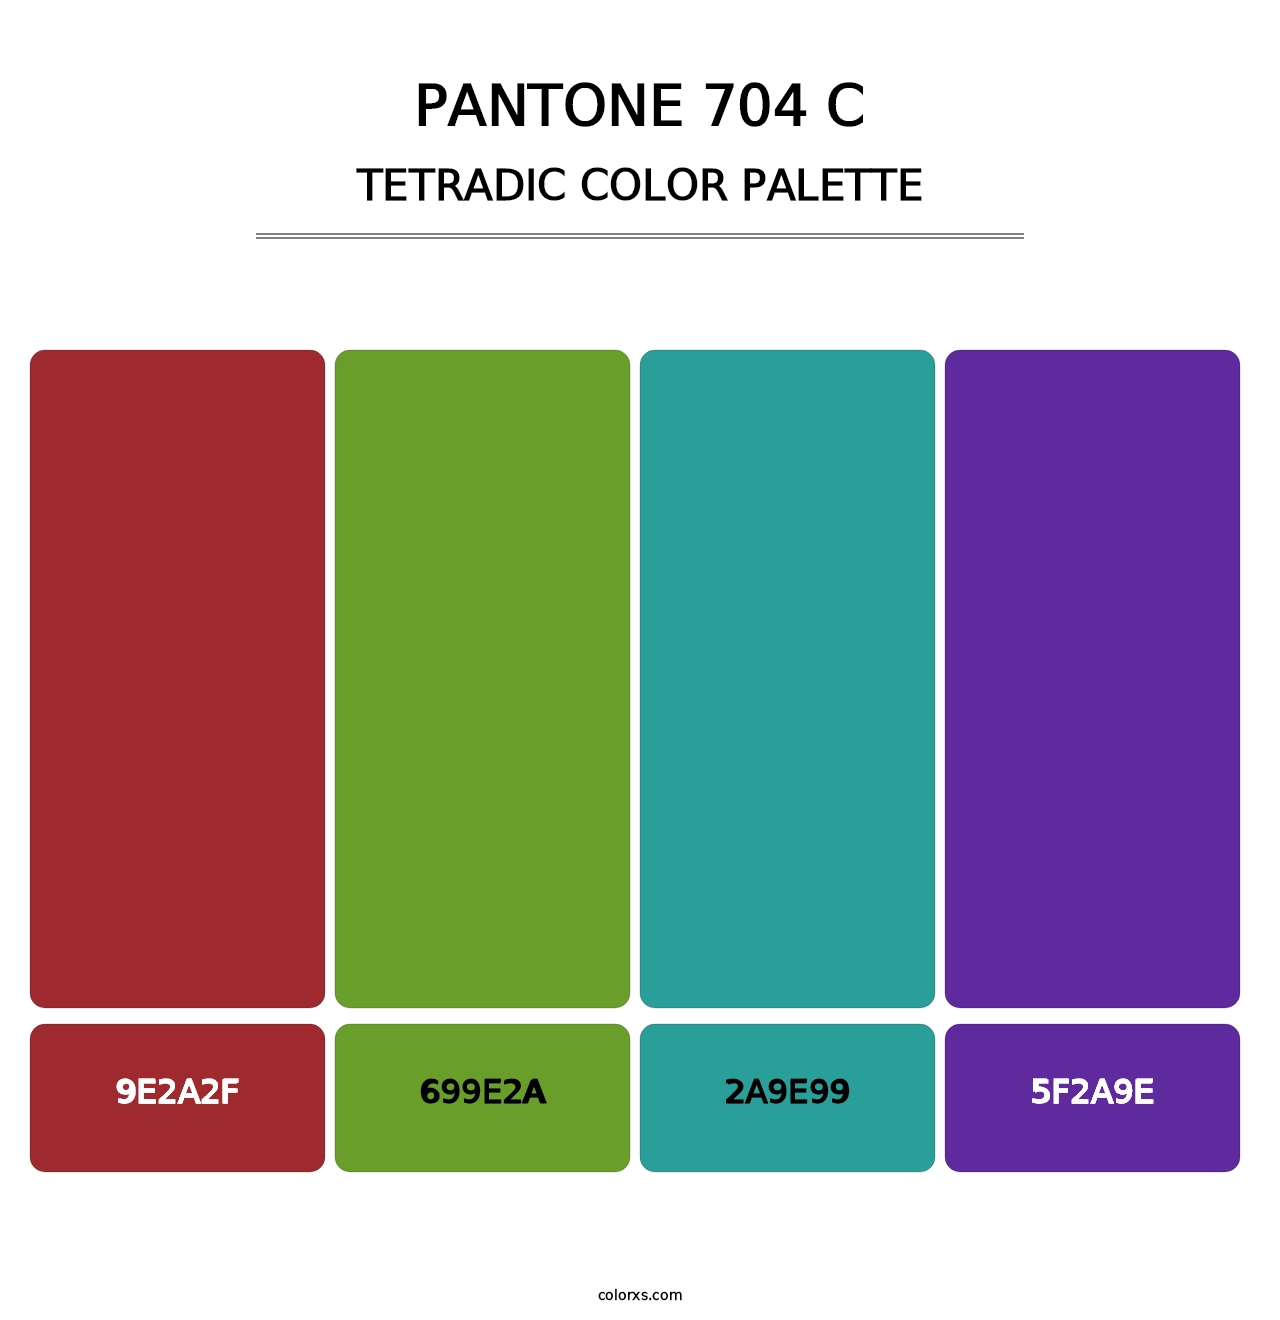 PANTONE 704 C - Tetradic Color Palette